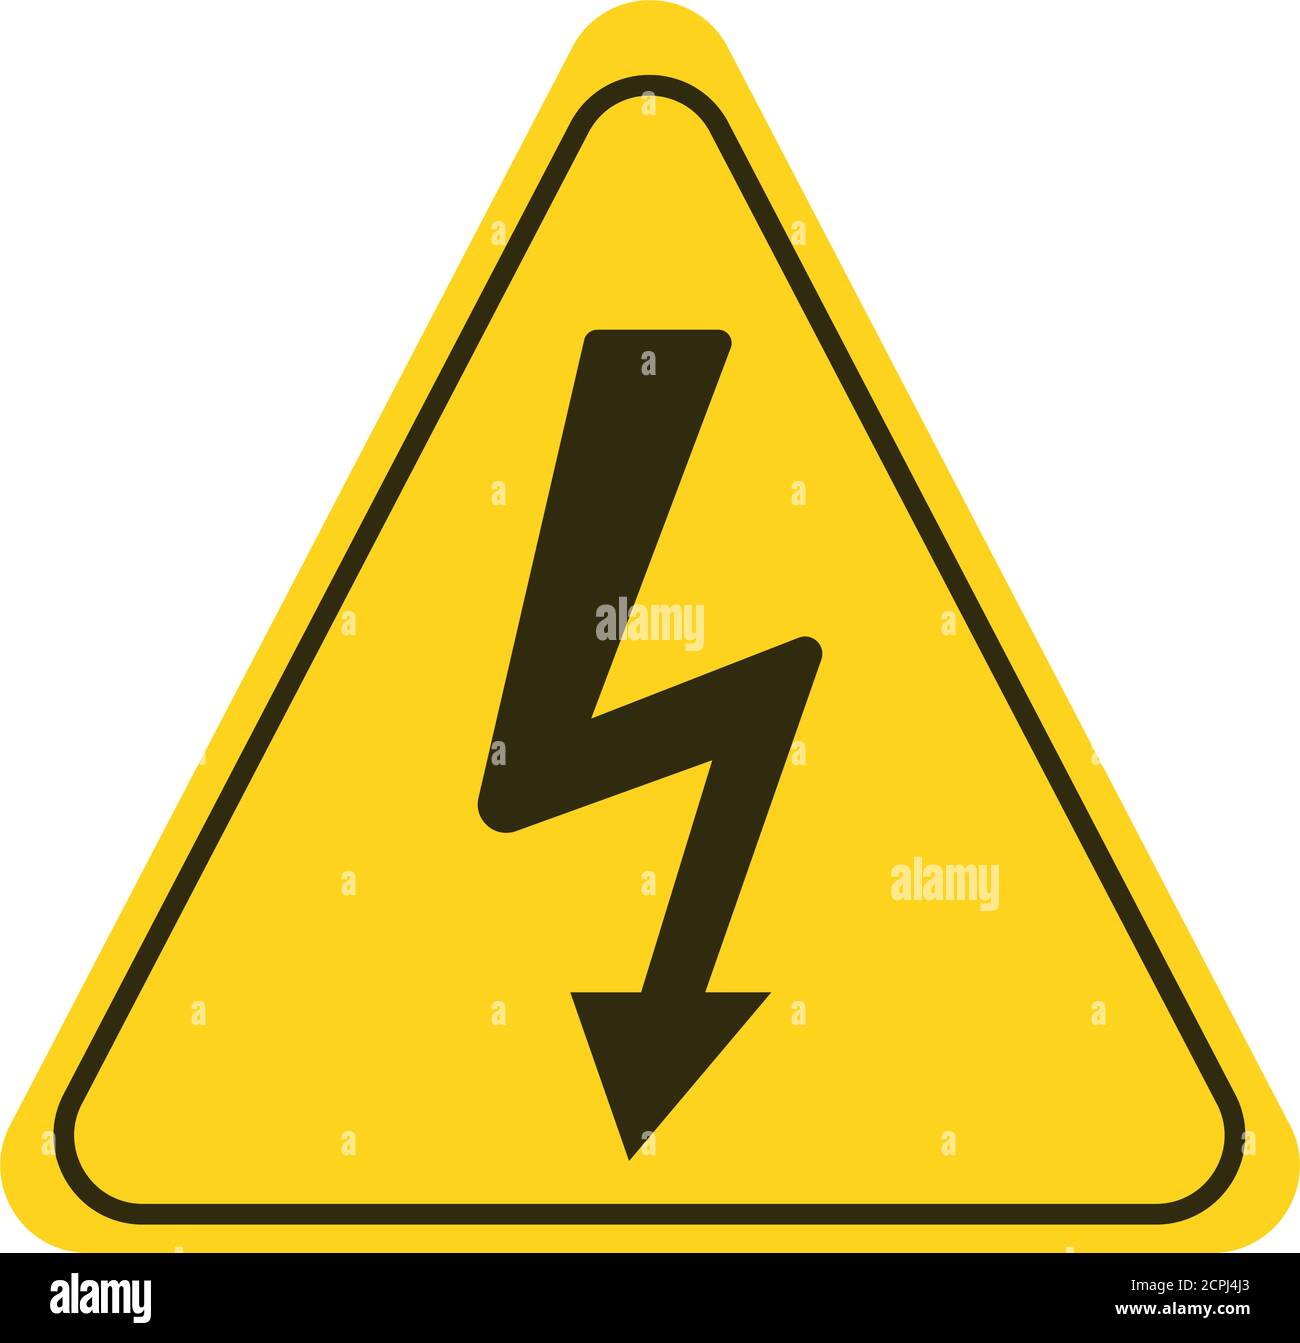 Pictograma peligro eléctrico fotografías e imágenes de alta resolución -  Alamy